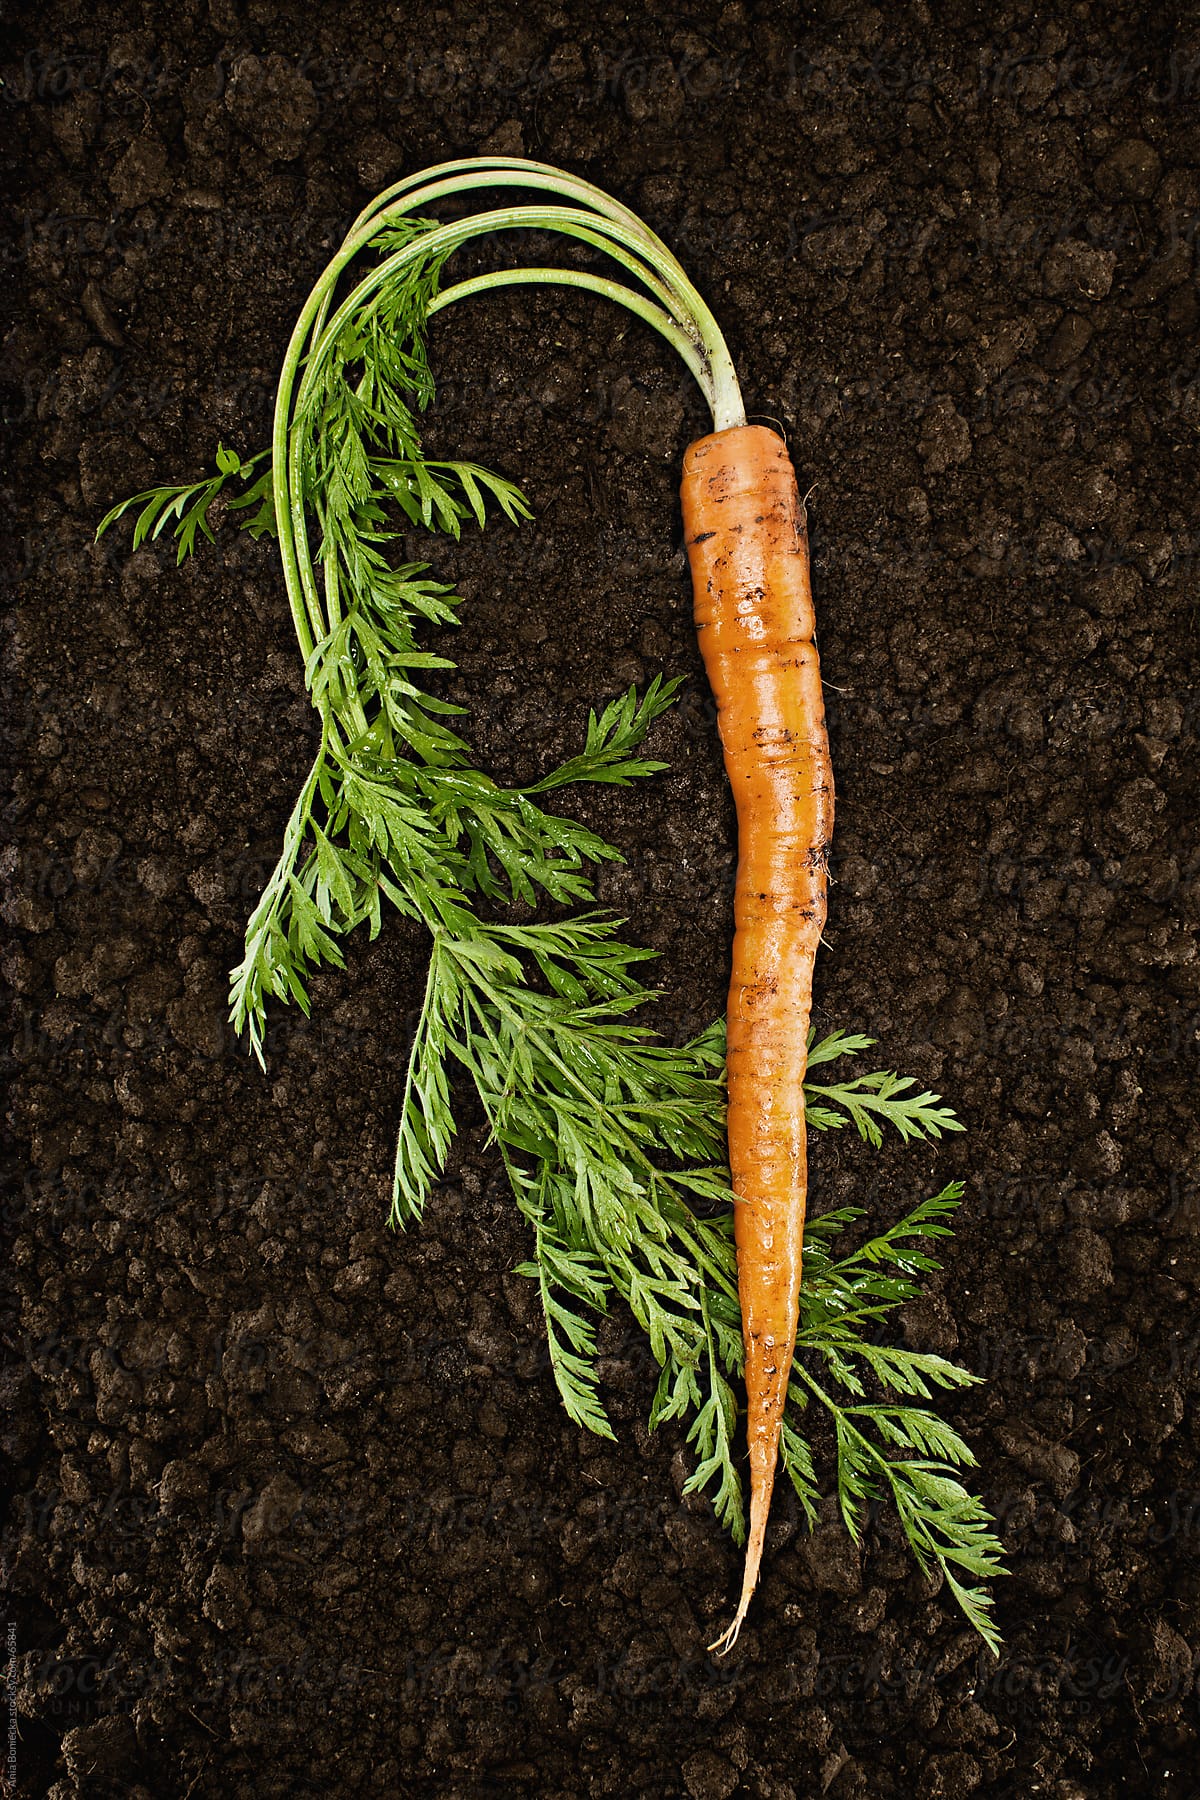 Organic Carrot :Fresh picked natural vegetable in soil